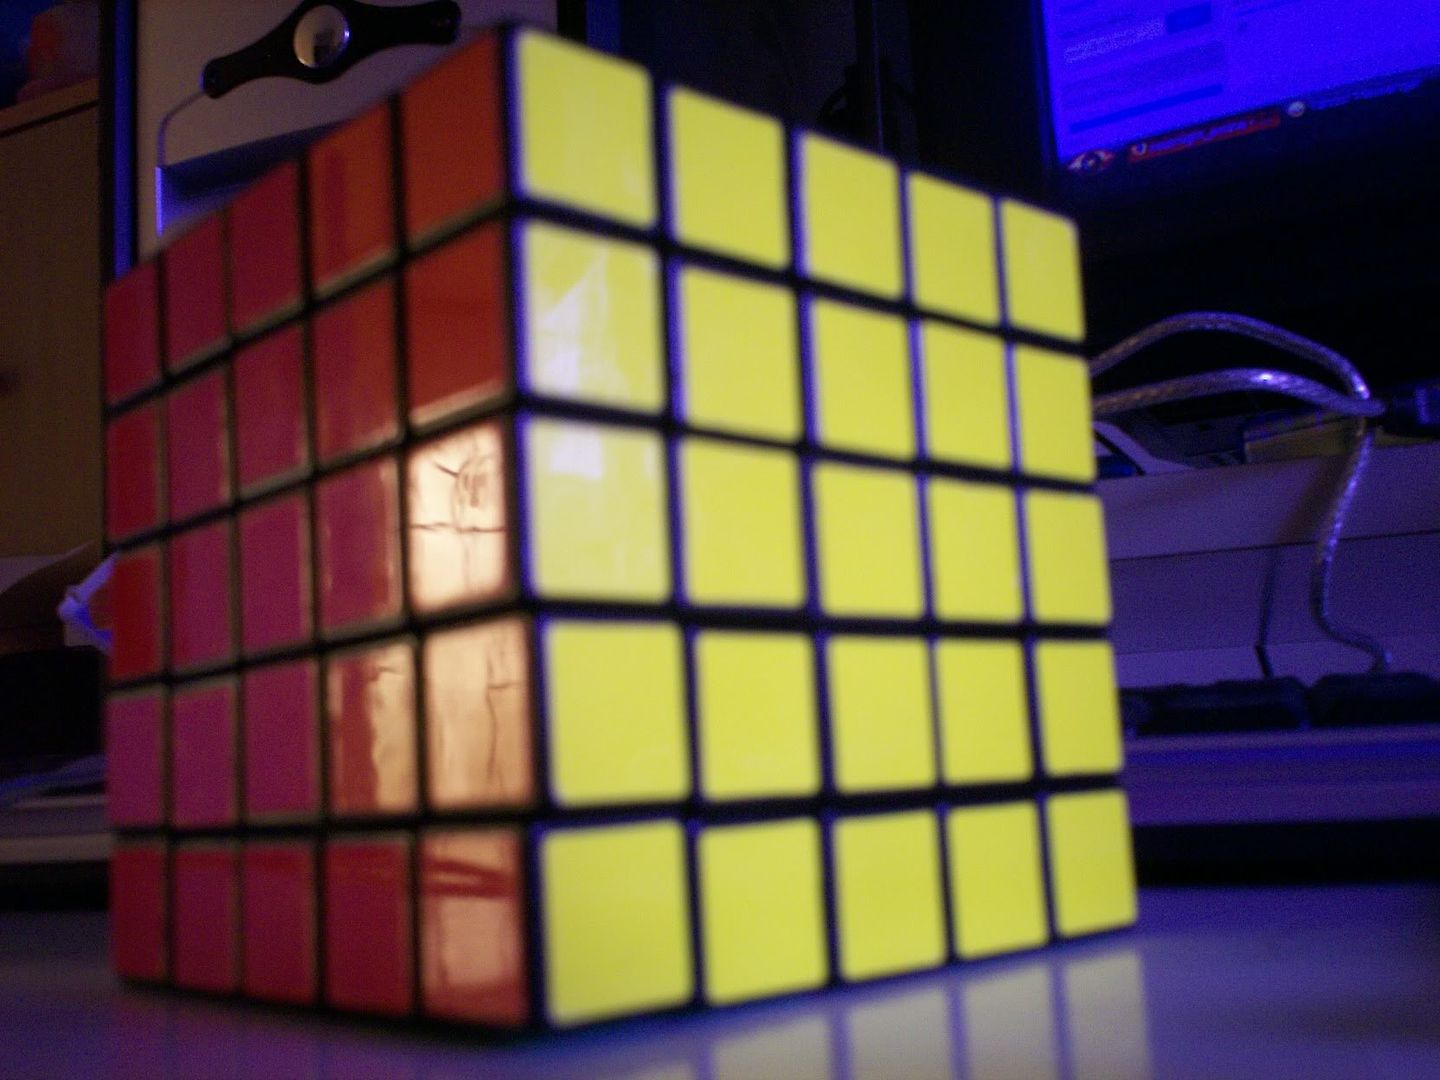 Professor's cube